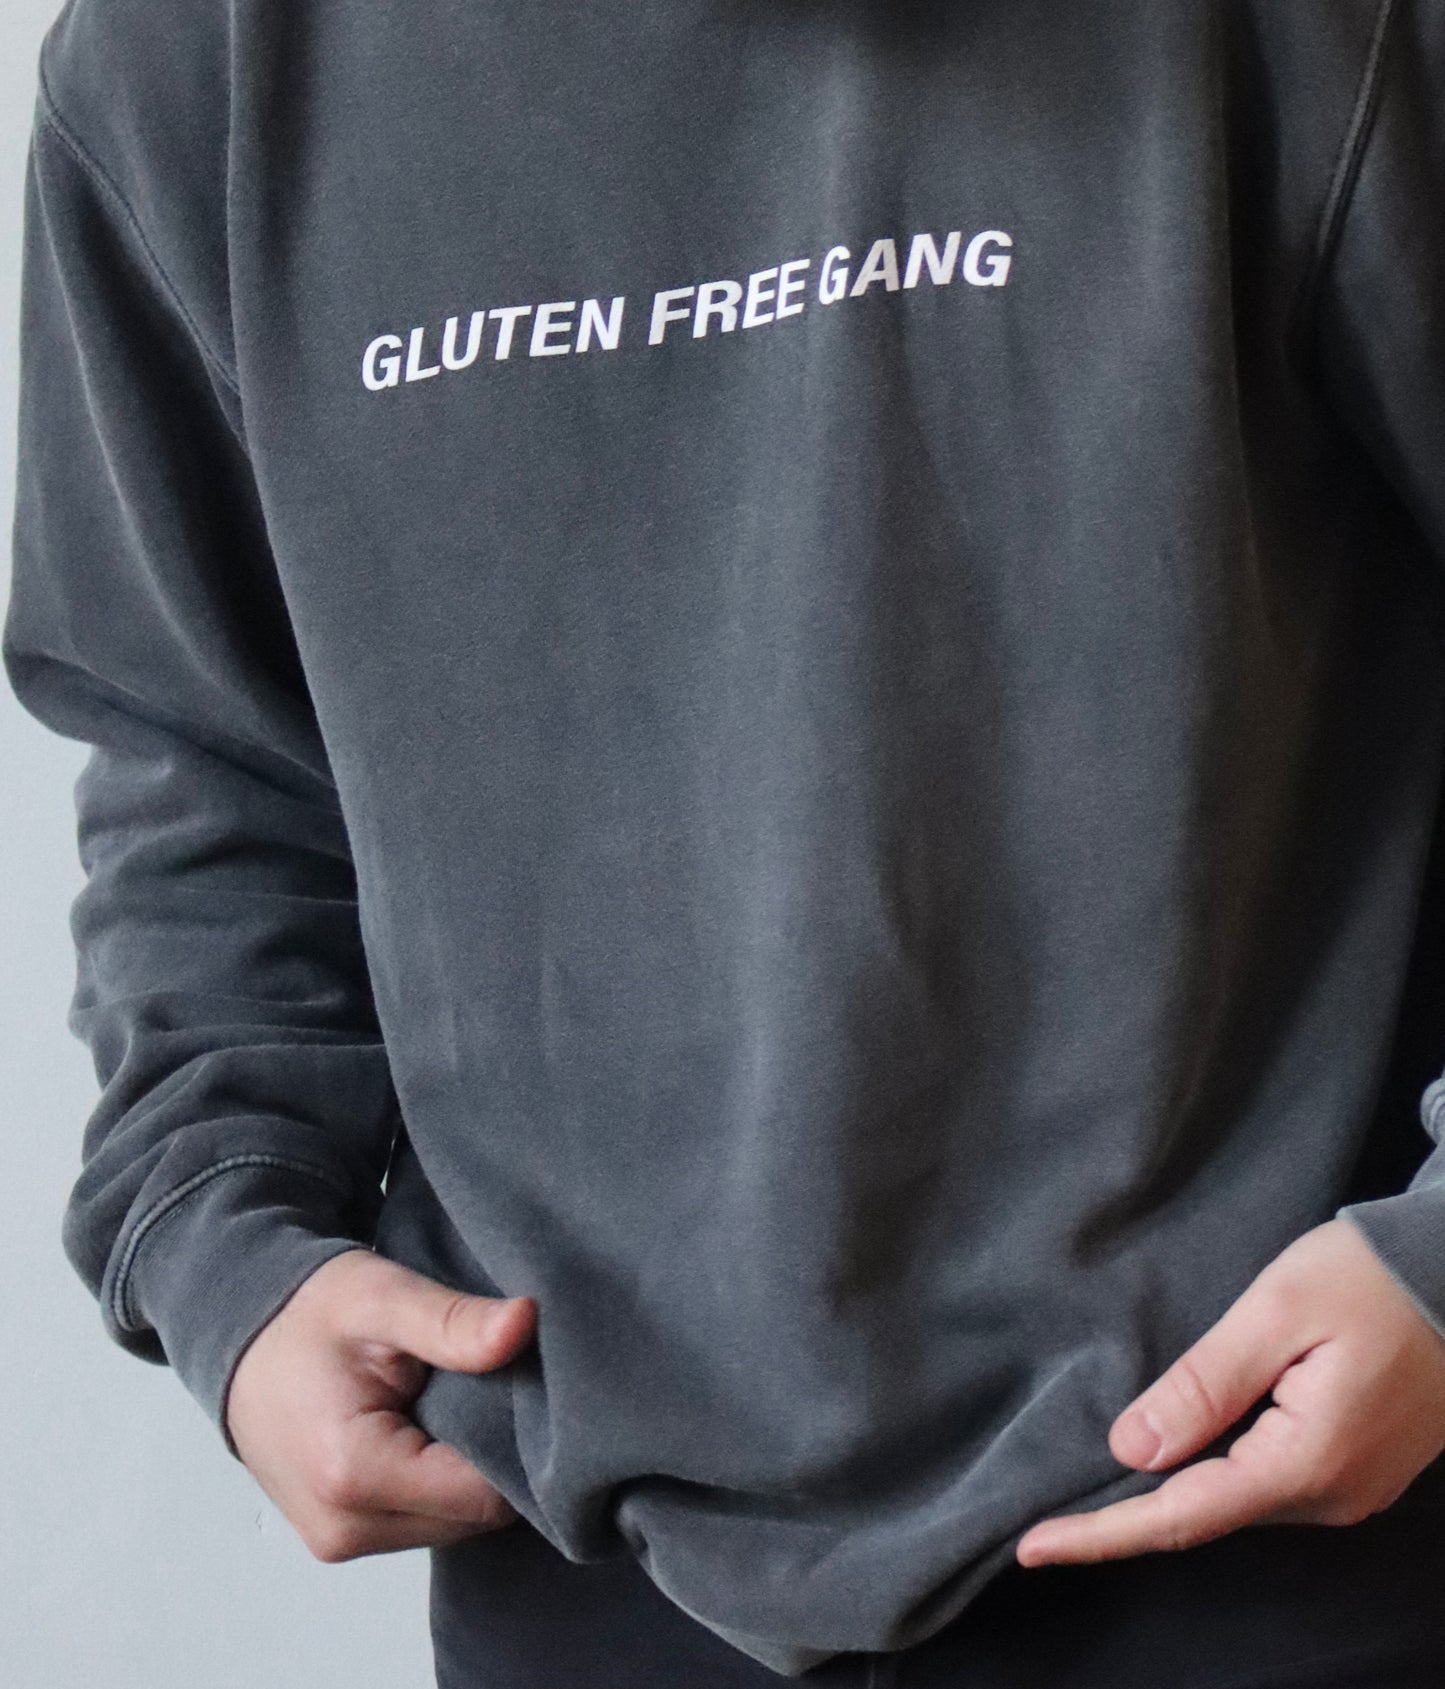 "Gluten Free Gang" Crewneck Sweatshirt (Pigment Black)